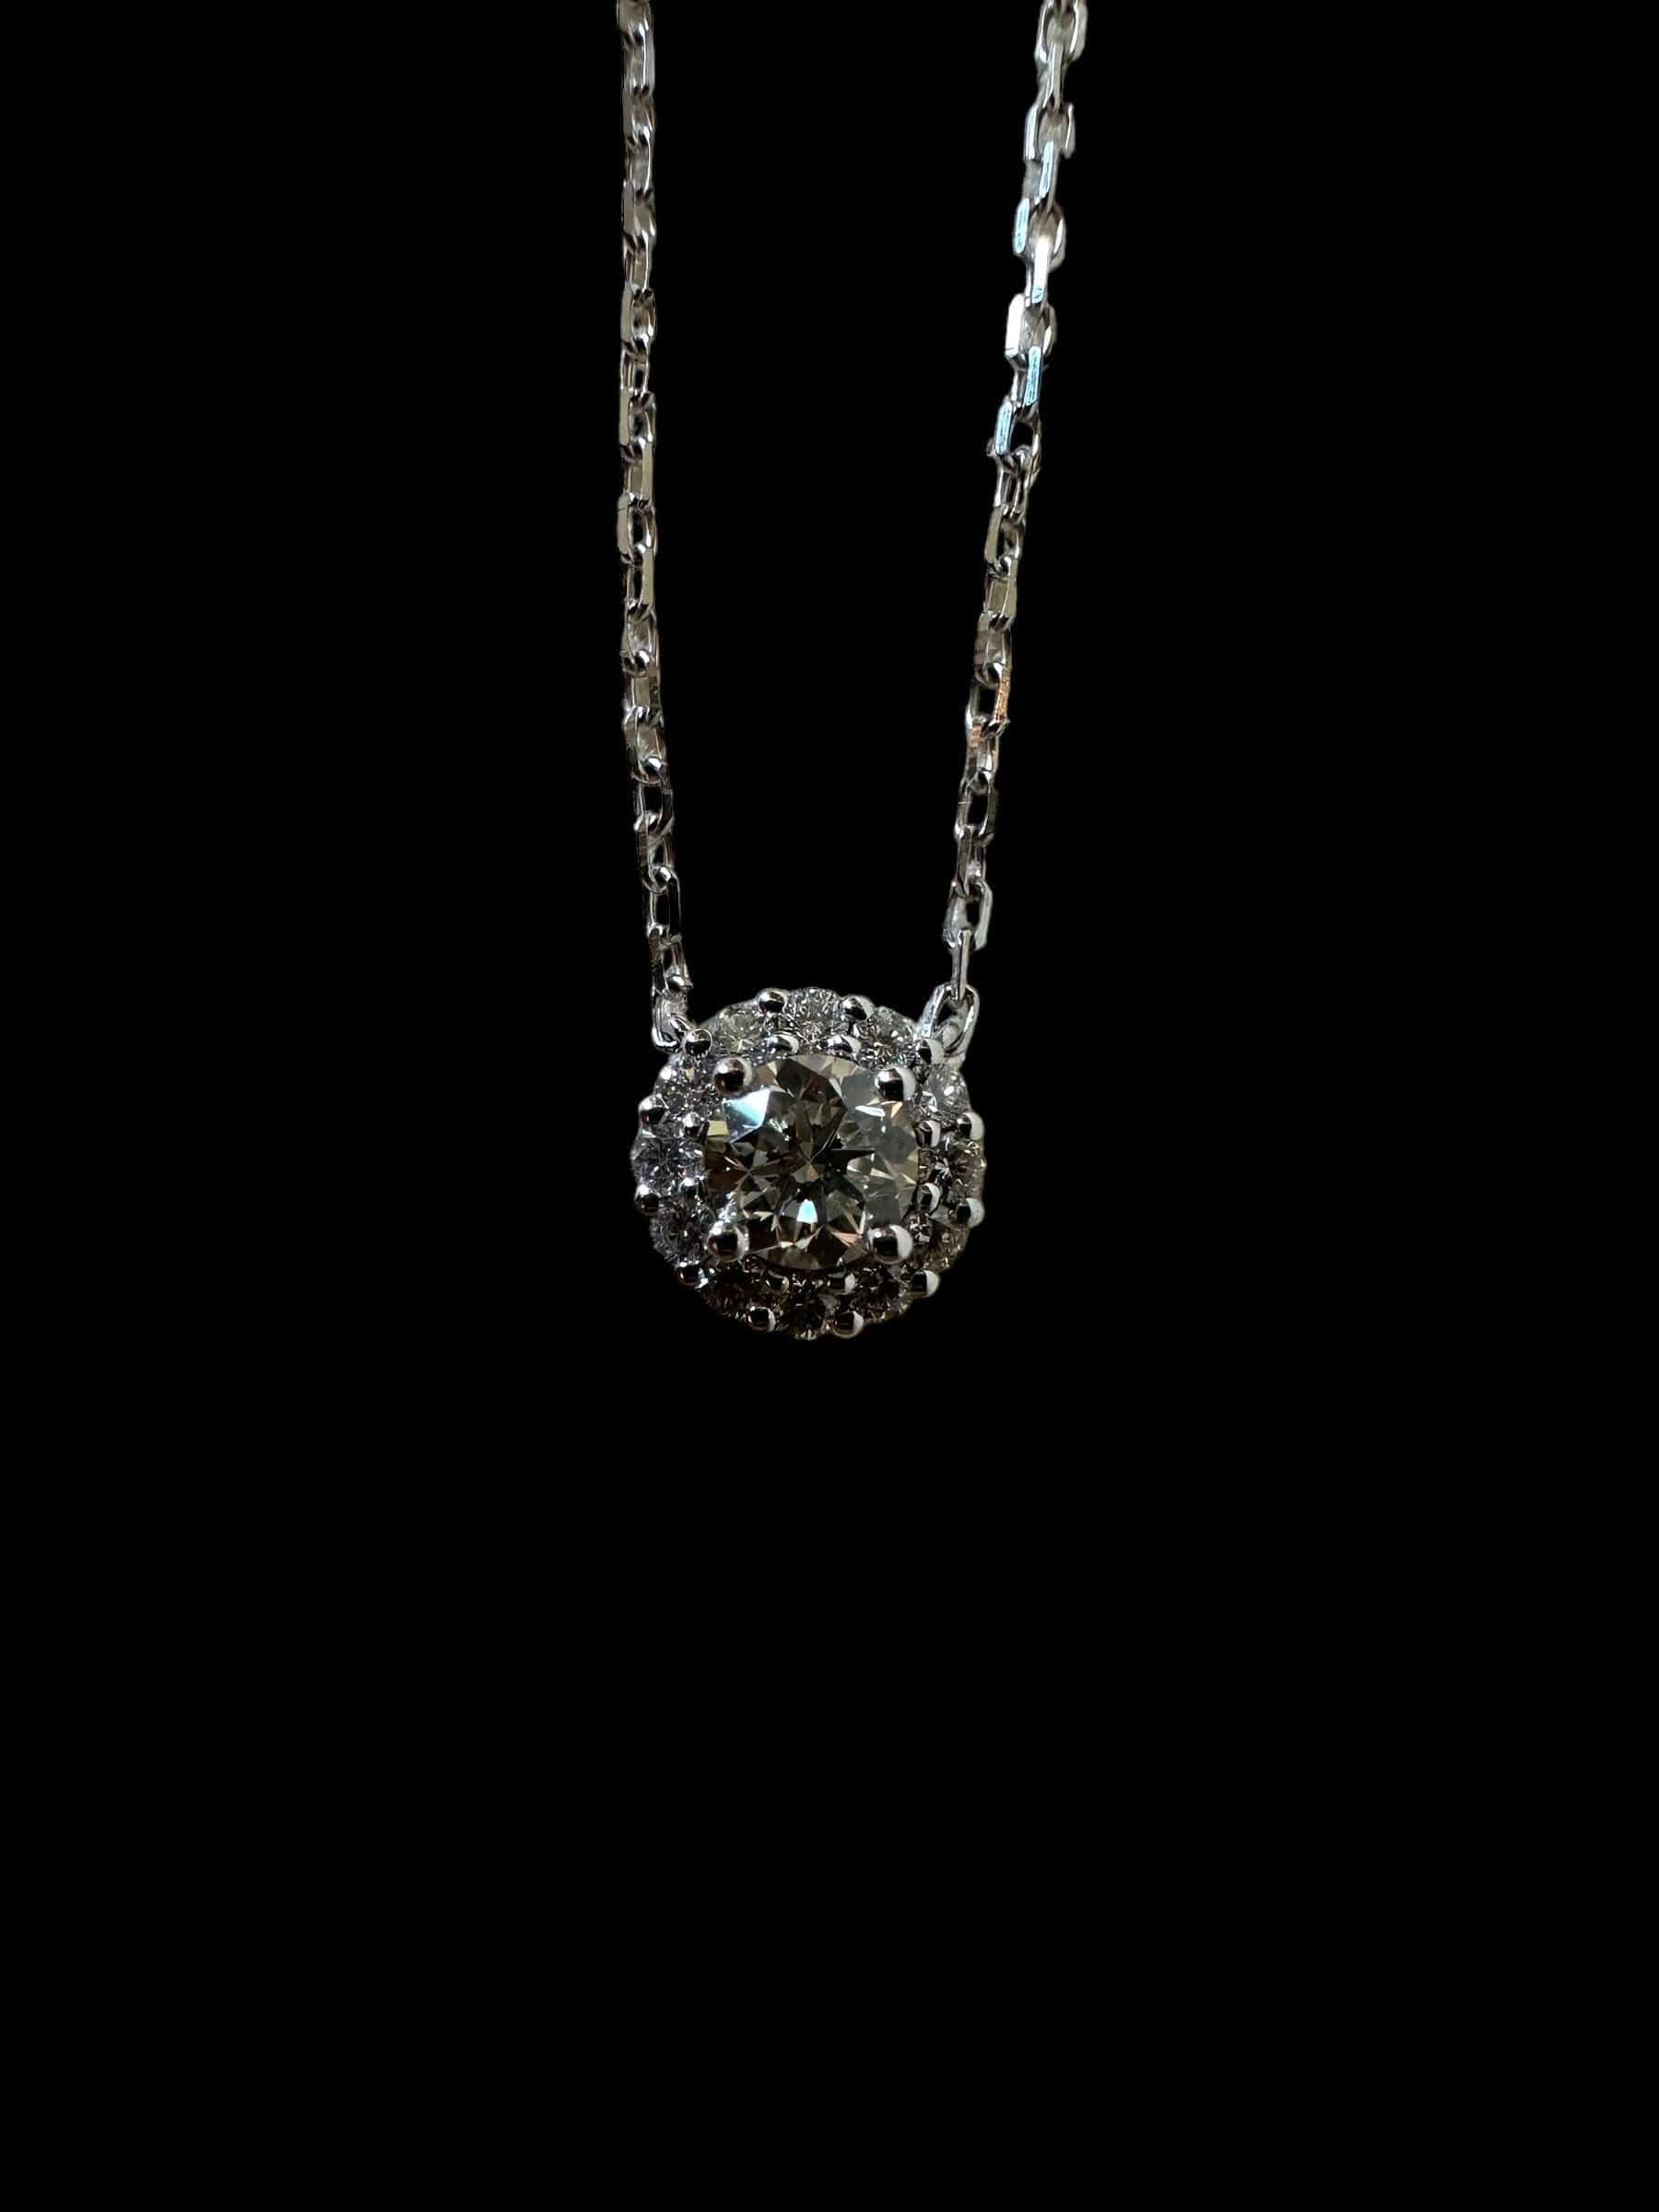 Luxury Promise Centre Diamond with Surrounding Diamond Pendant Necklace set in 18K White Gold